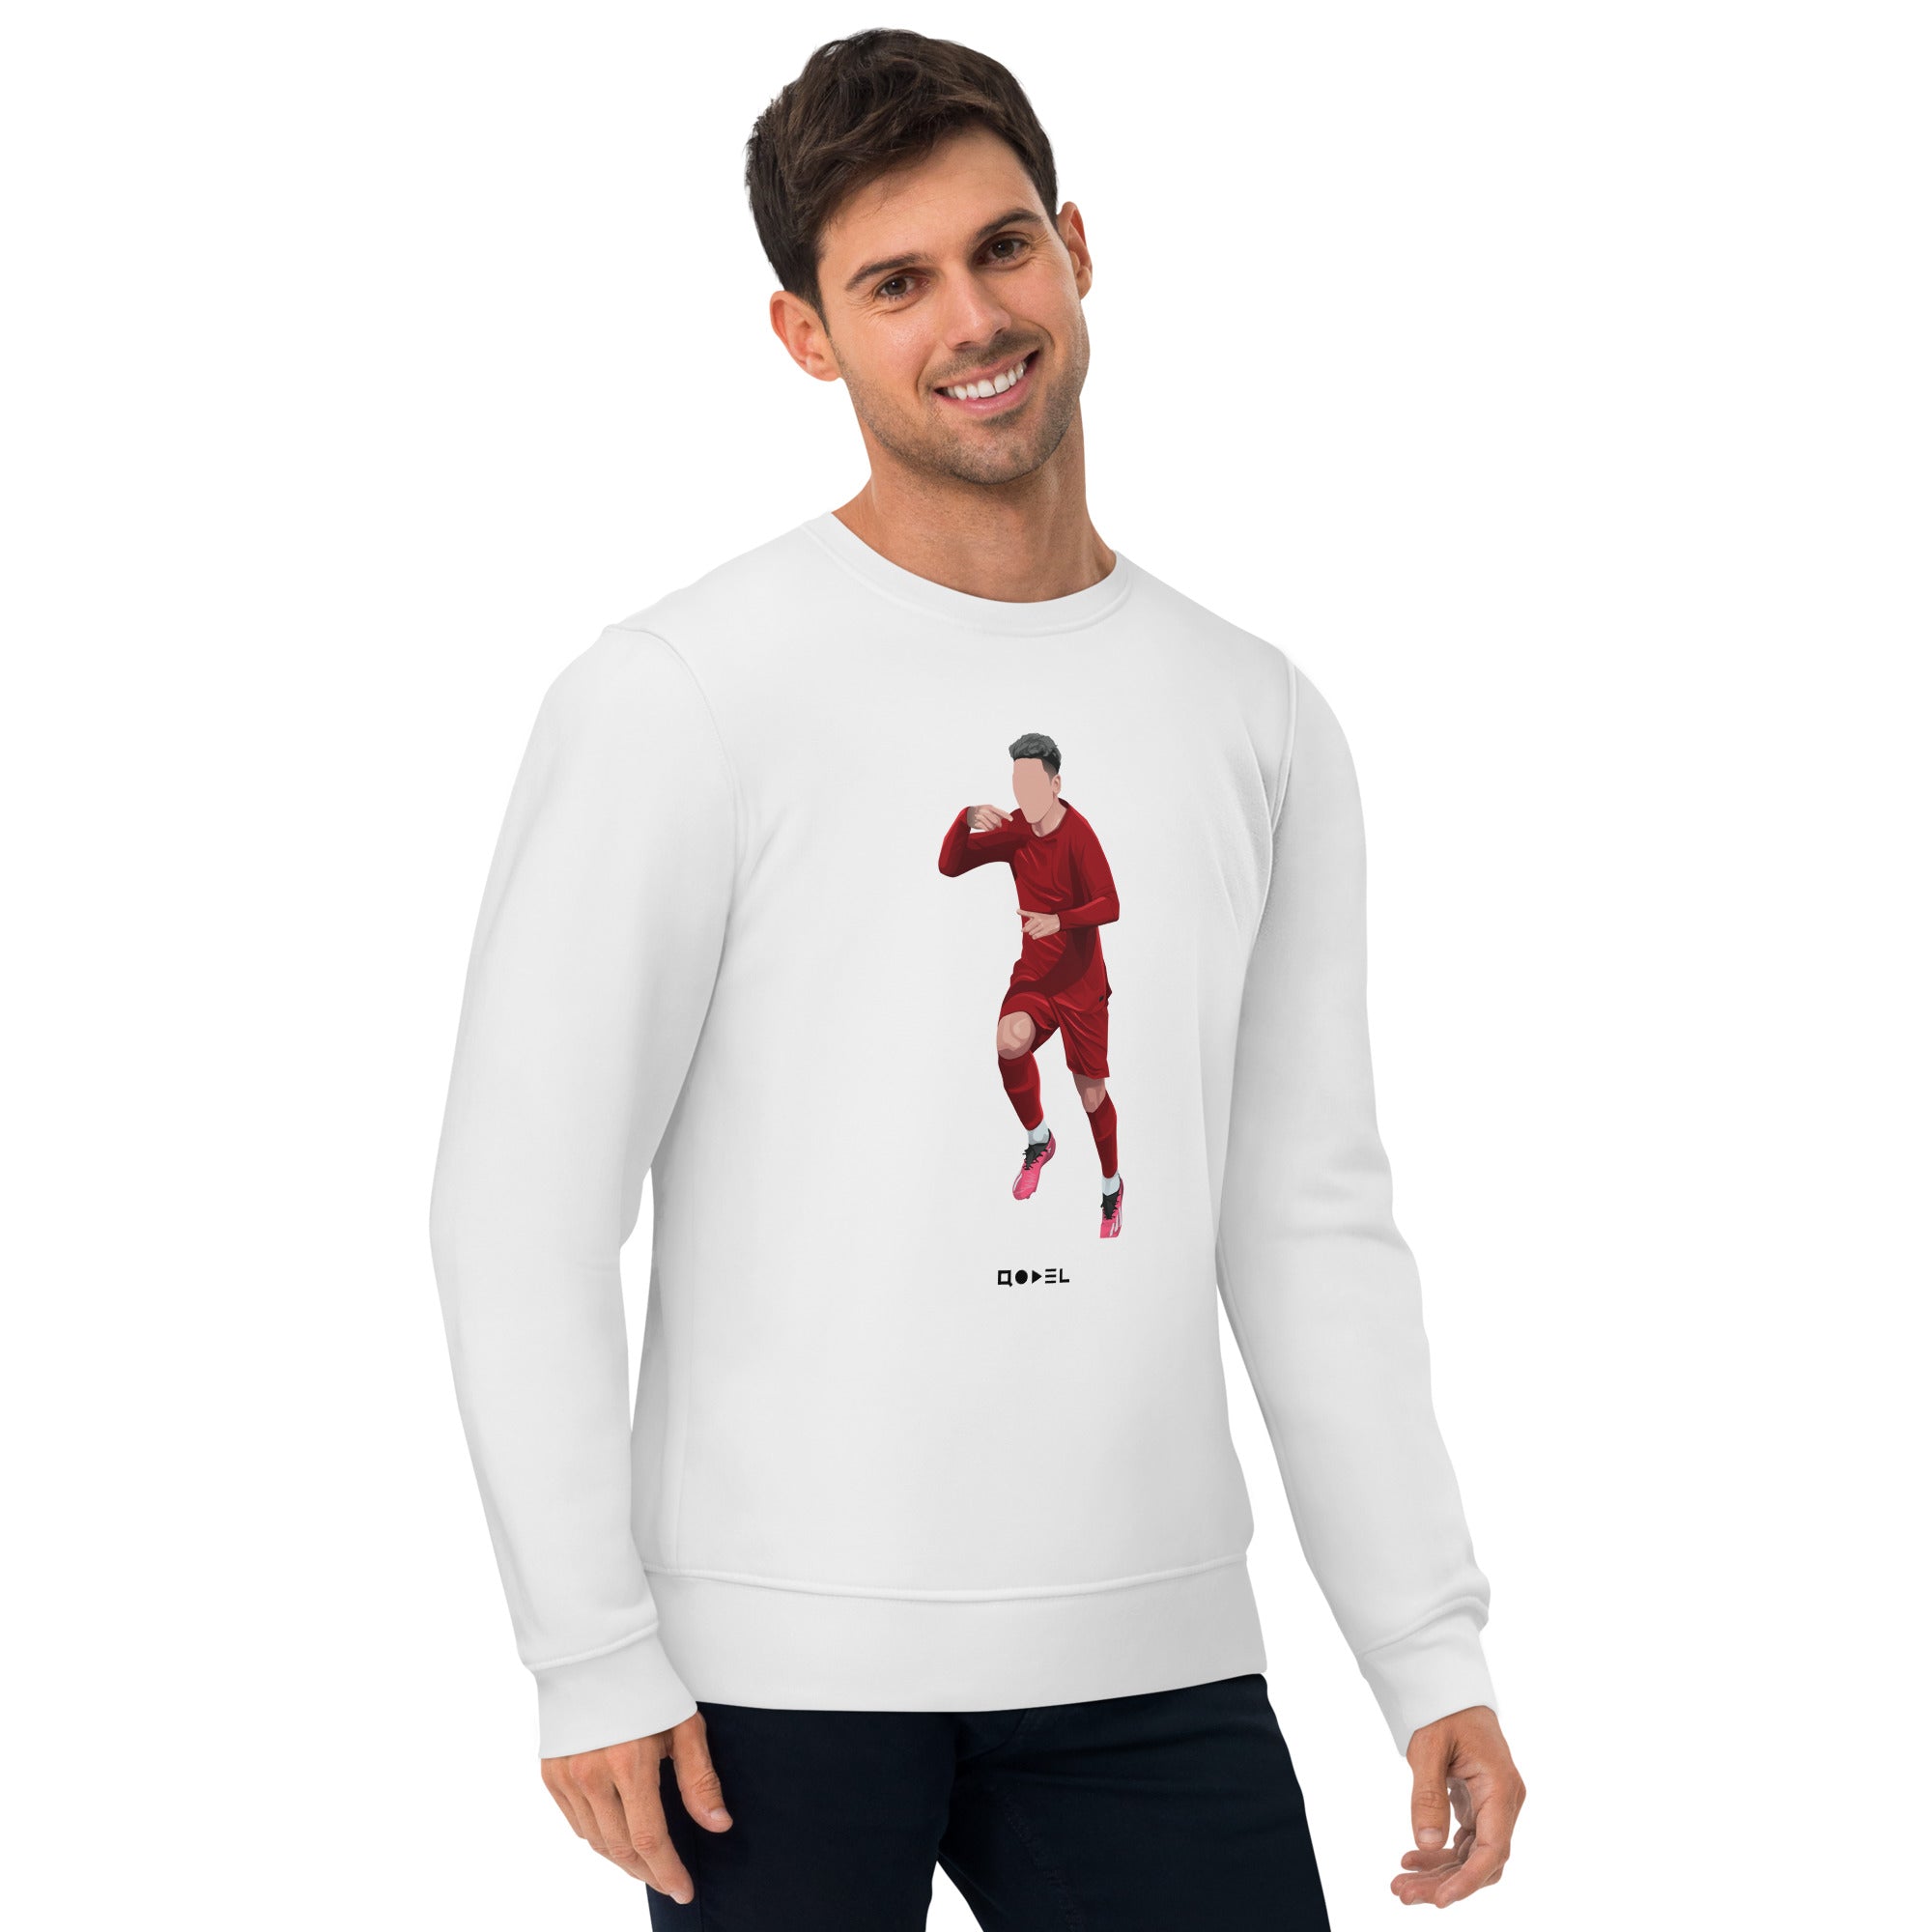 Roberto Firmino Sweatshirt